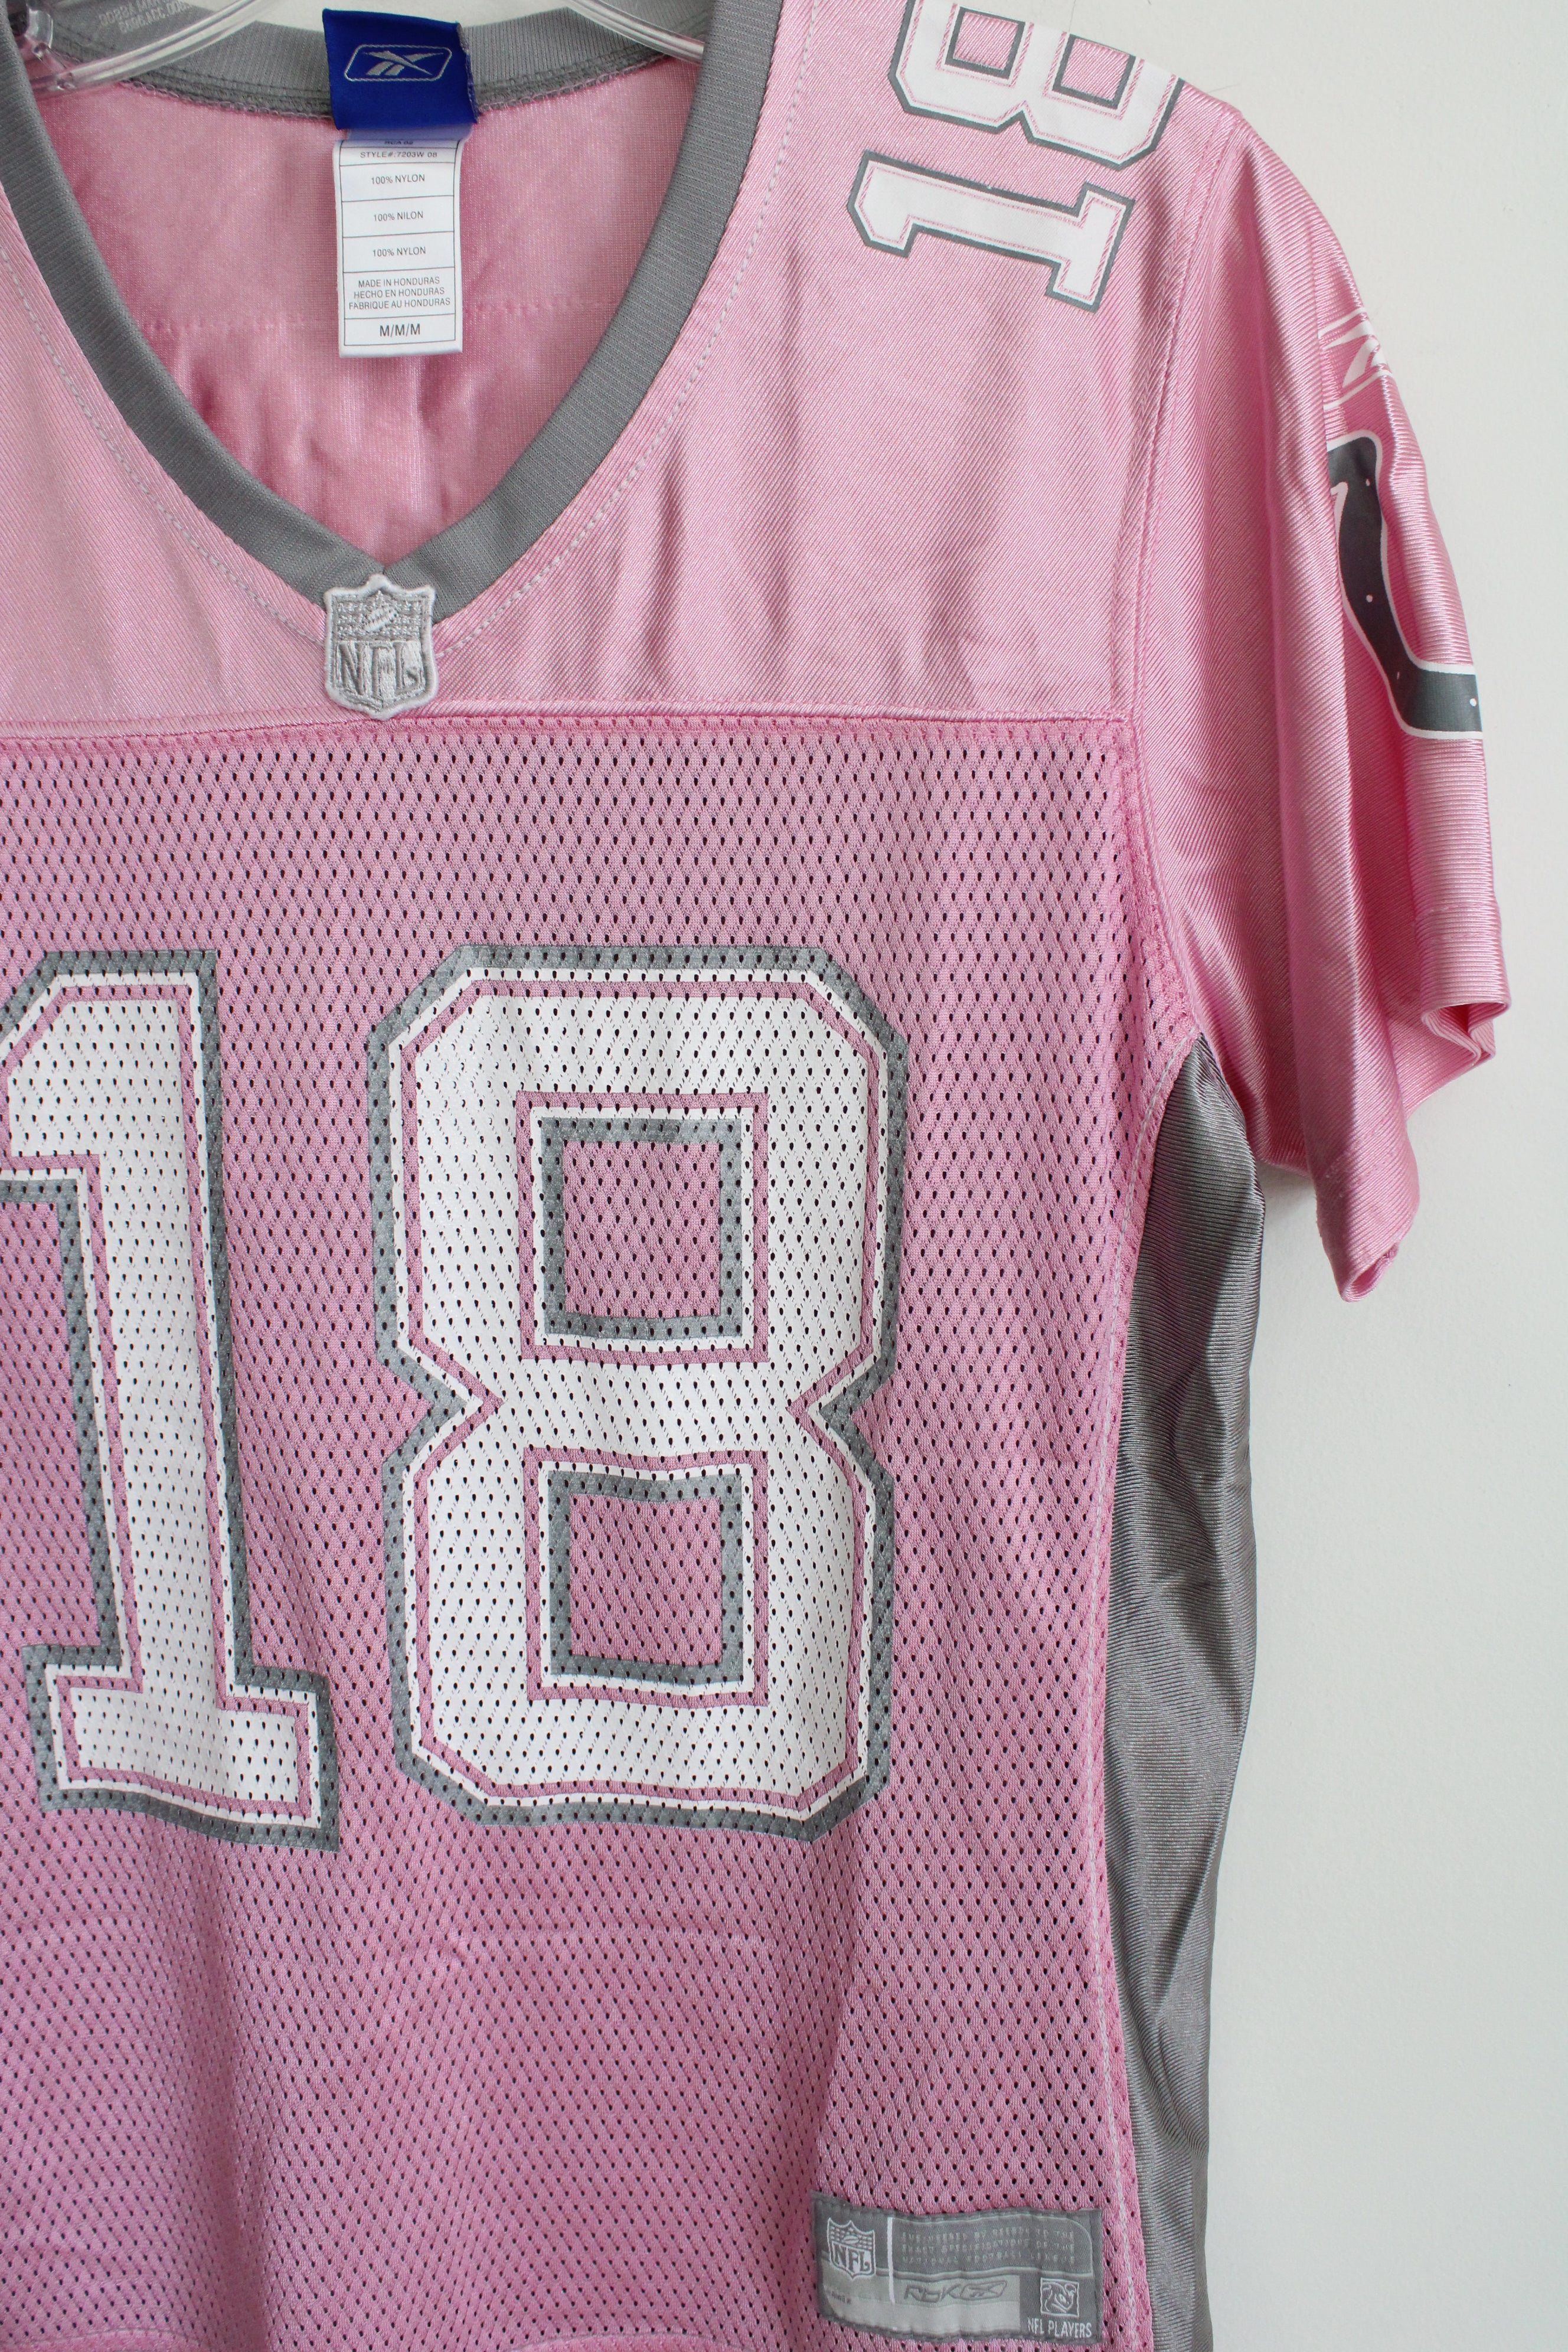 Reebok NFL #18 Manning Pink Jersey | M